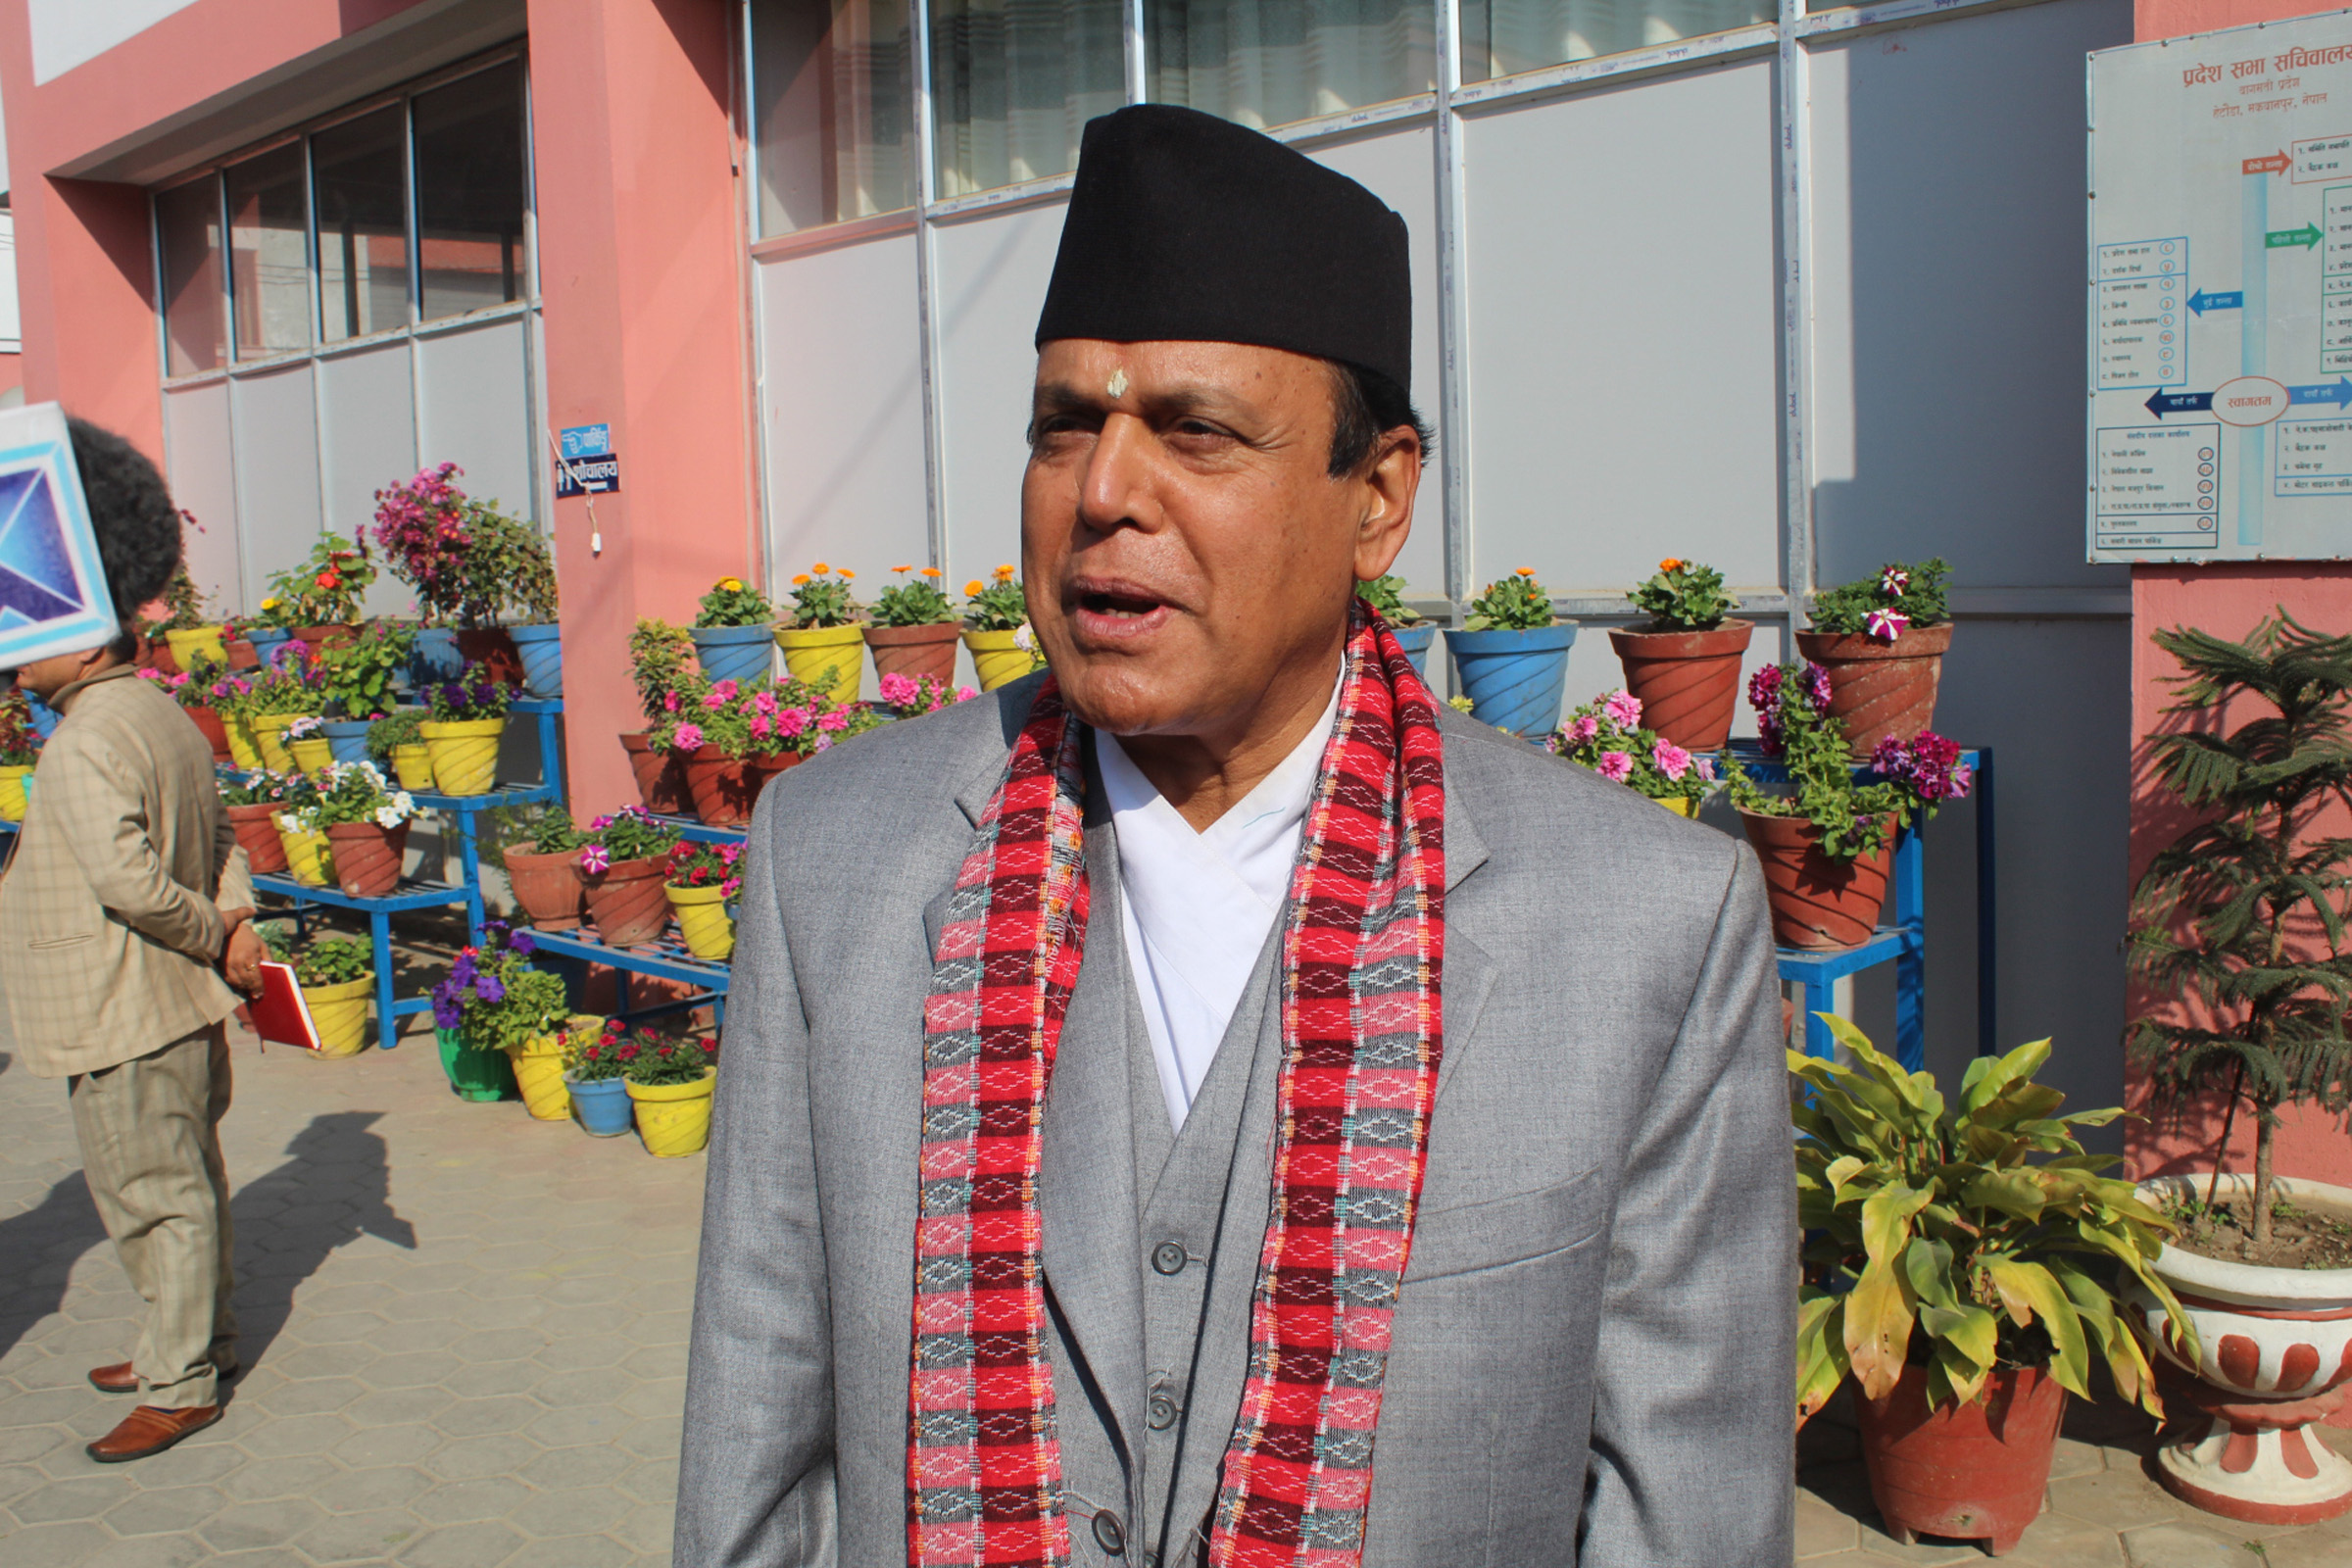 Bagmati province ahead in law-making: Bagmati Speaker Pathak